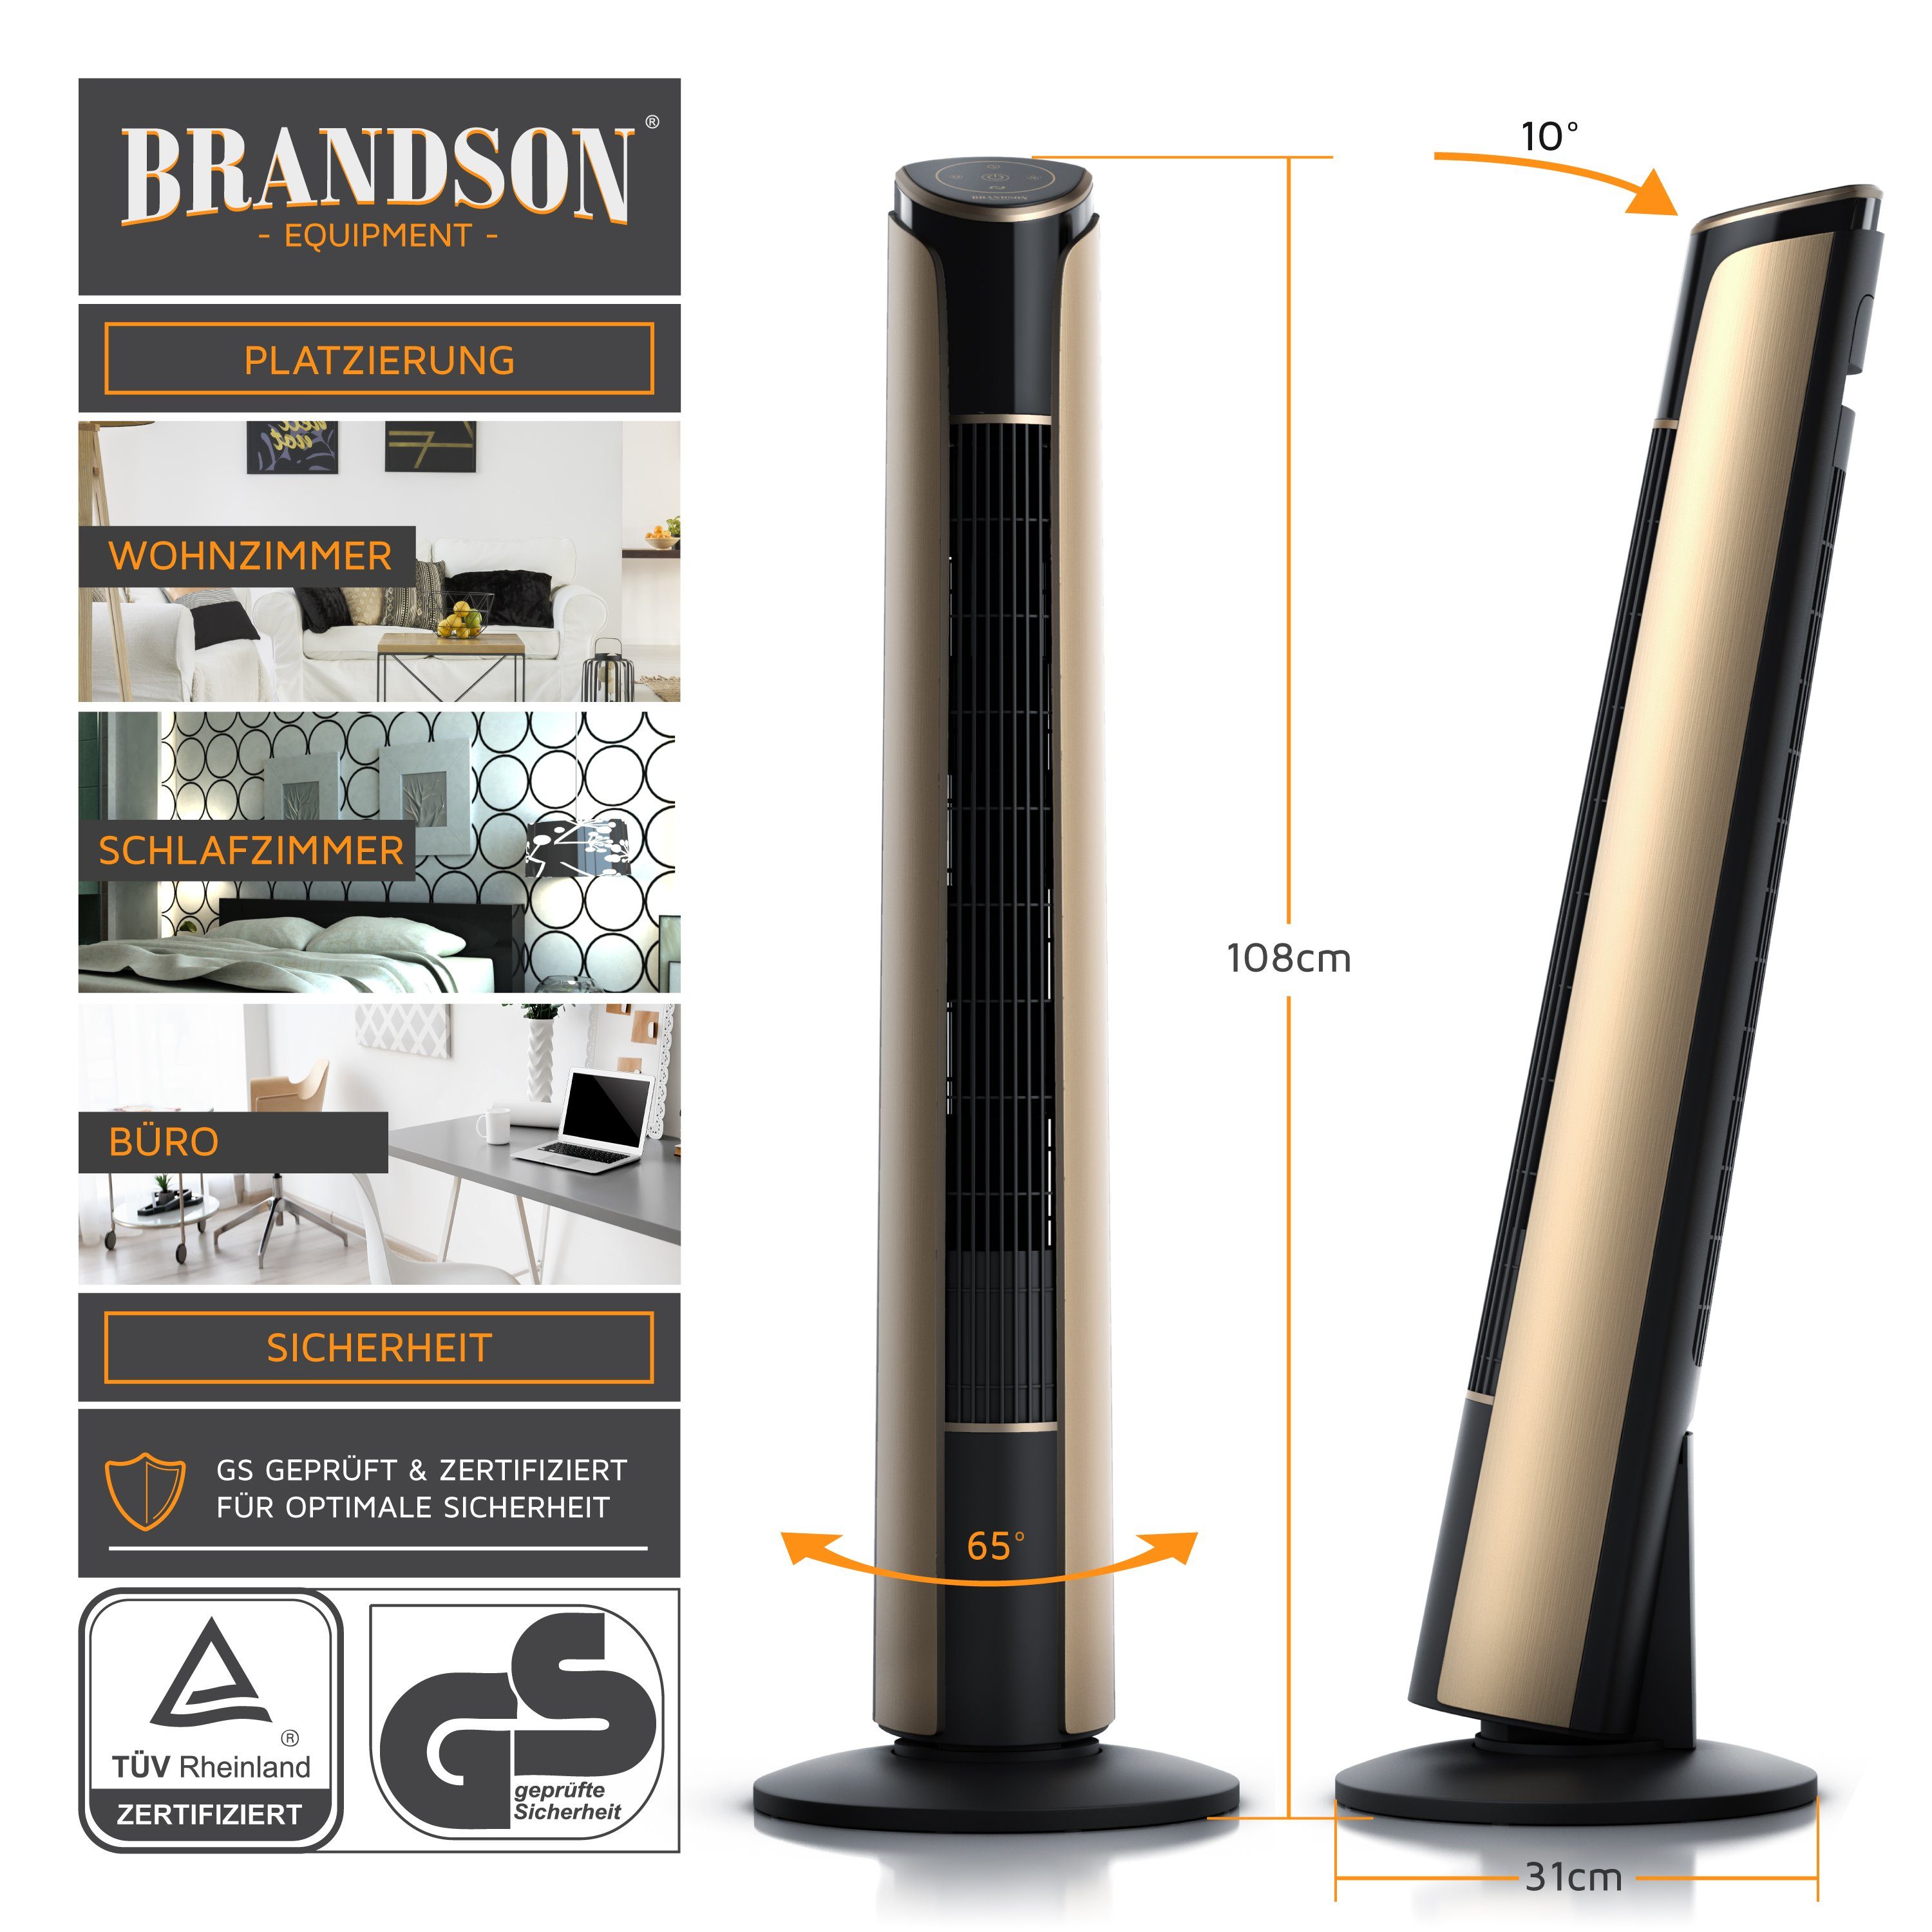 Oszillation, gold 10° 4 Brandson Turmventilator, neigbar, Modi, 108cm Fernbedienung, Standventilator